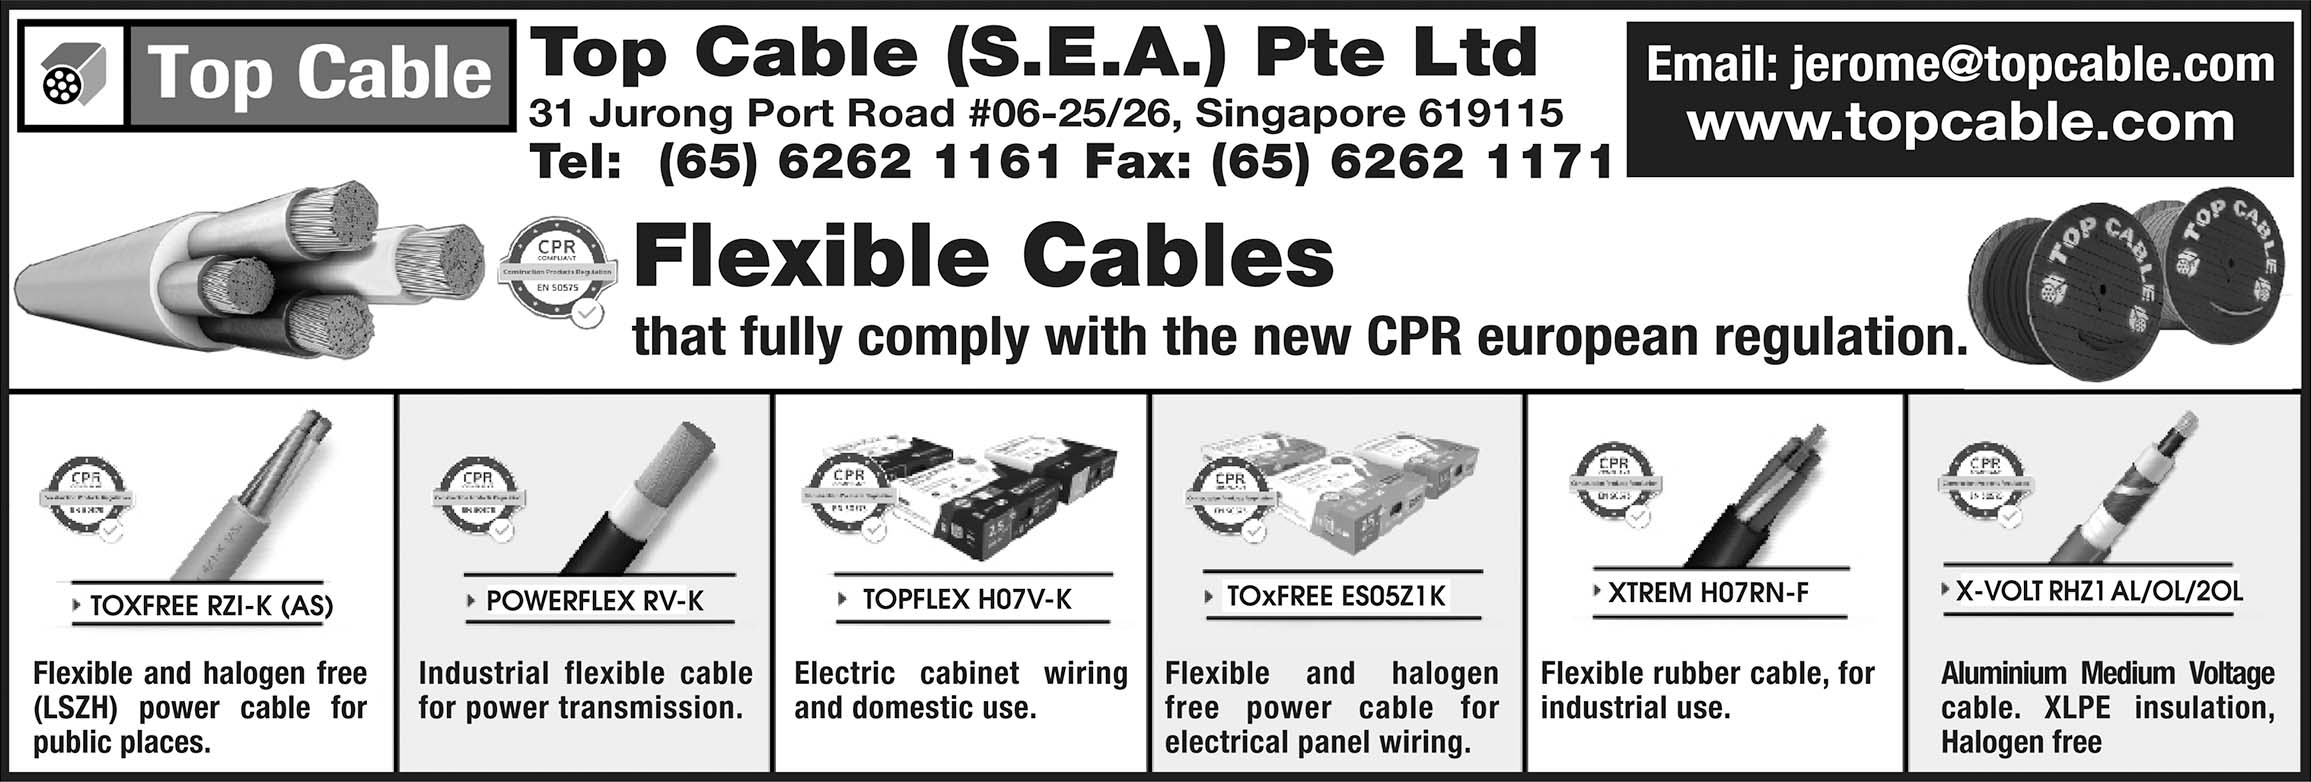 Top Cable (S.E.A) Pte Ltd.